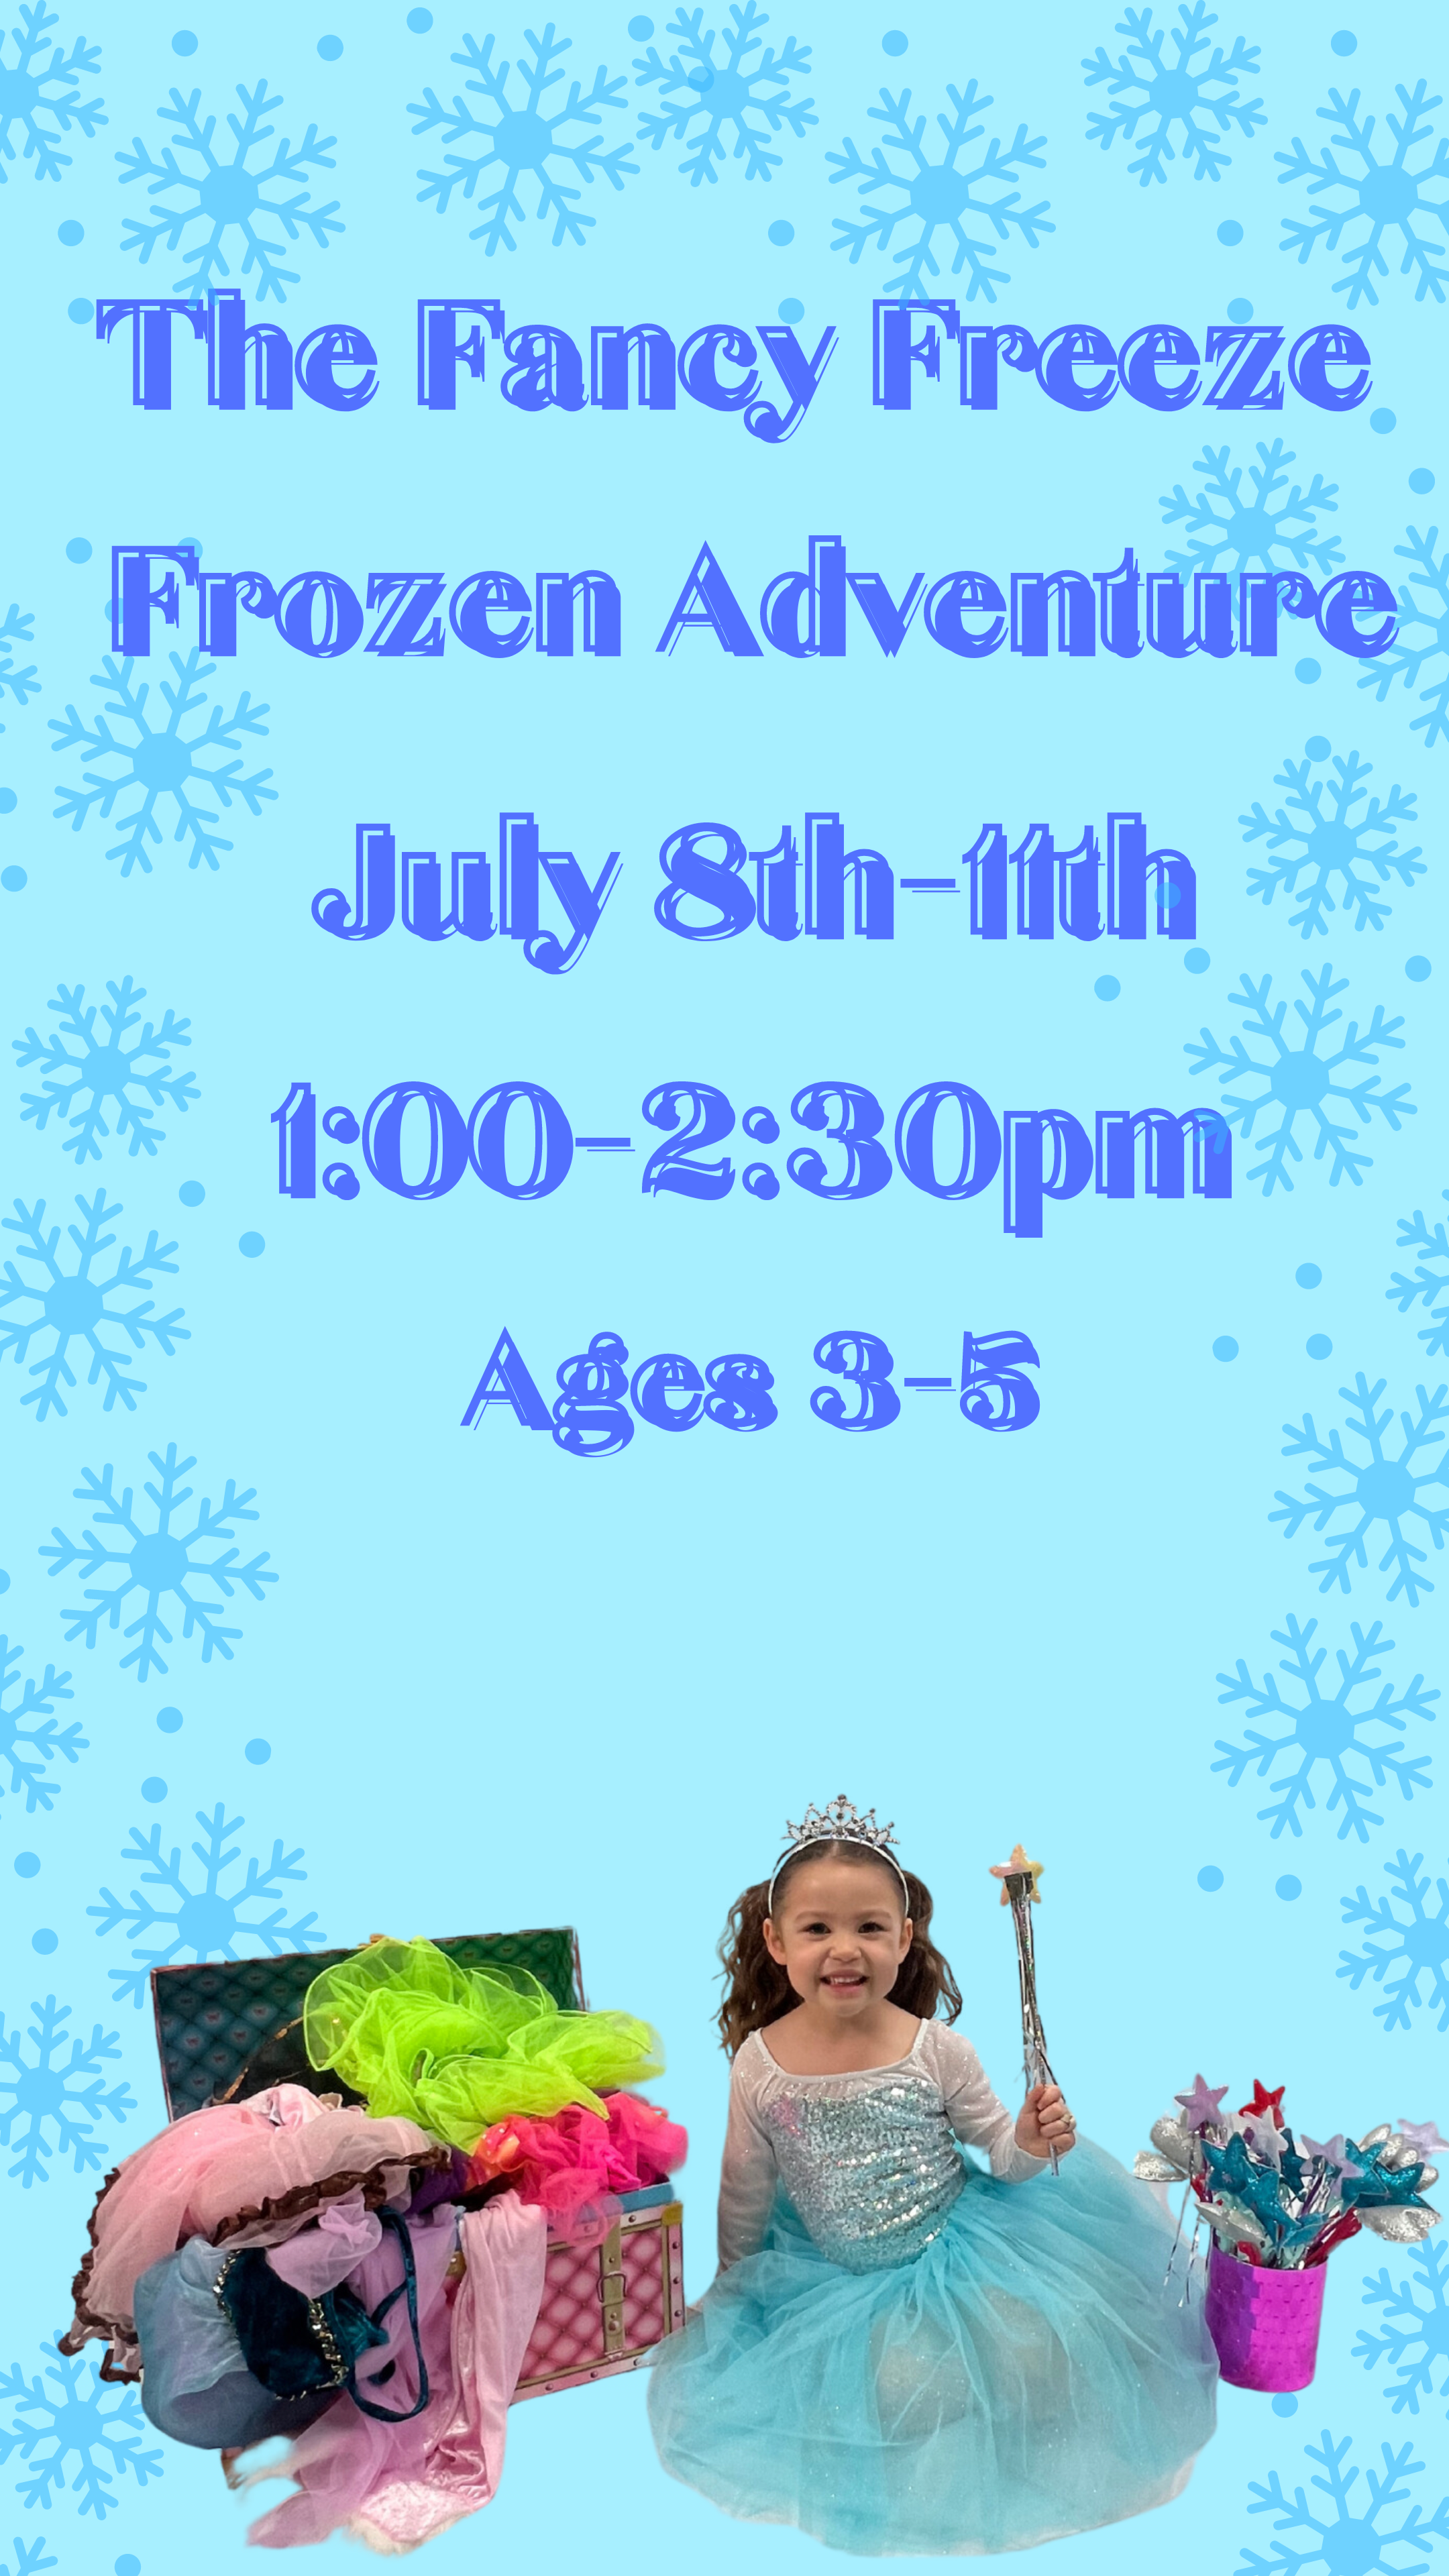 The Fancy Freeze Frozen Adventure.png